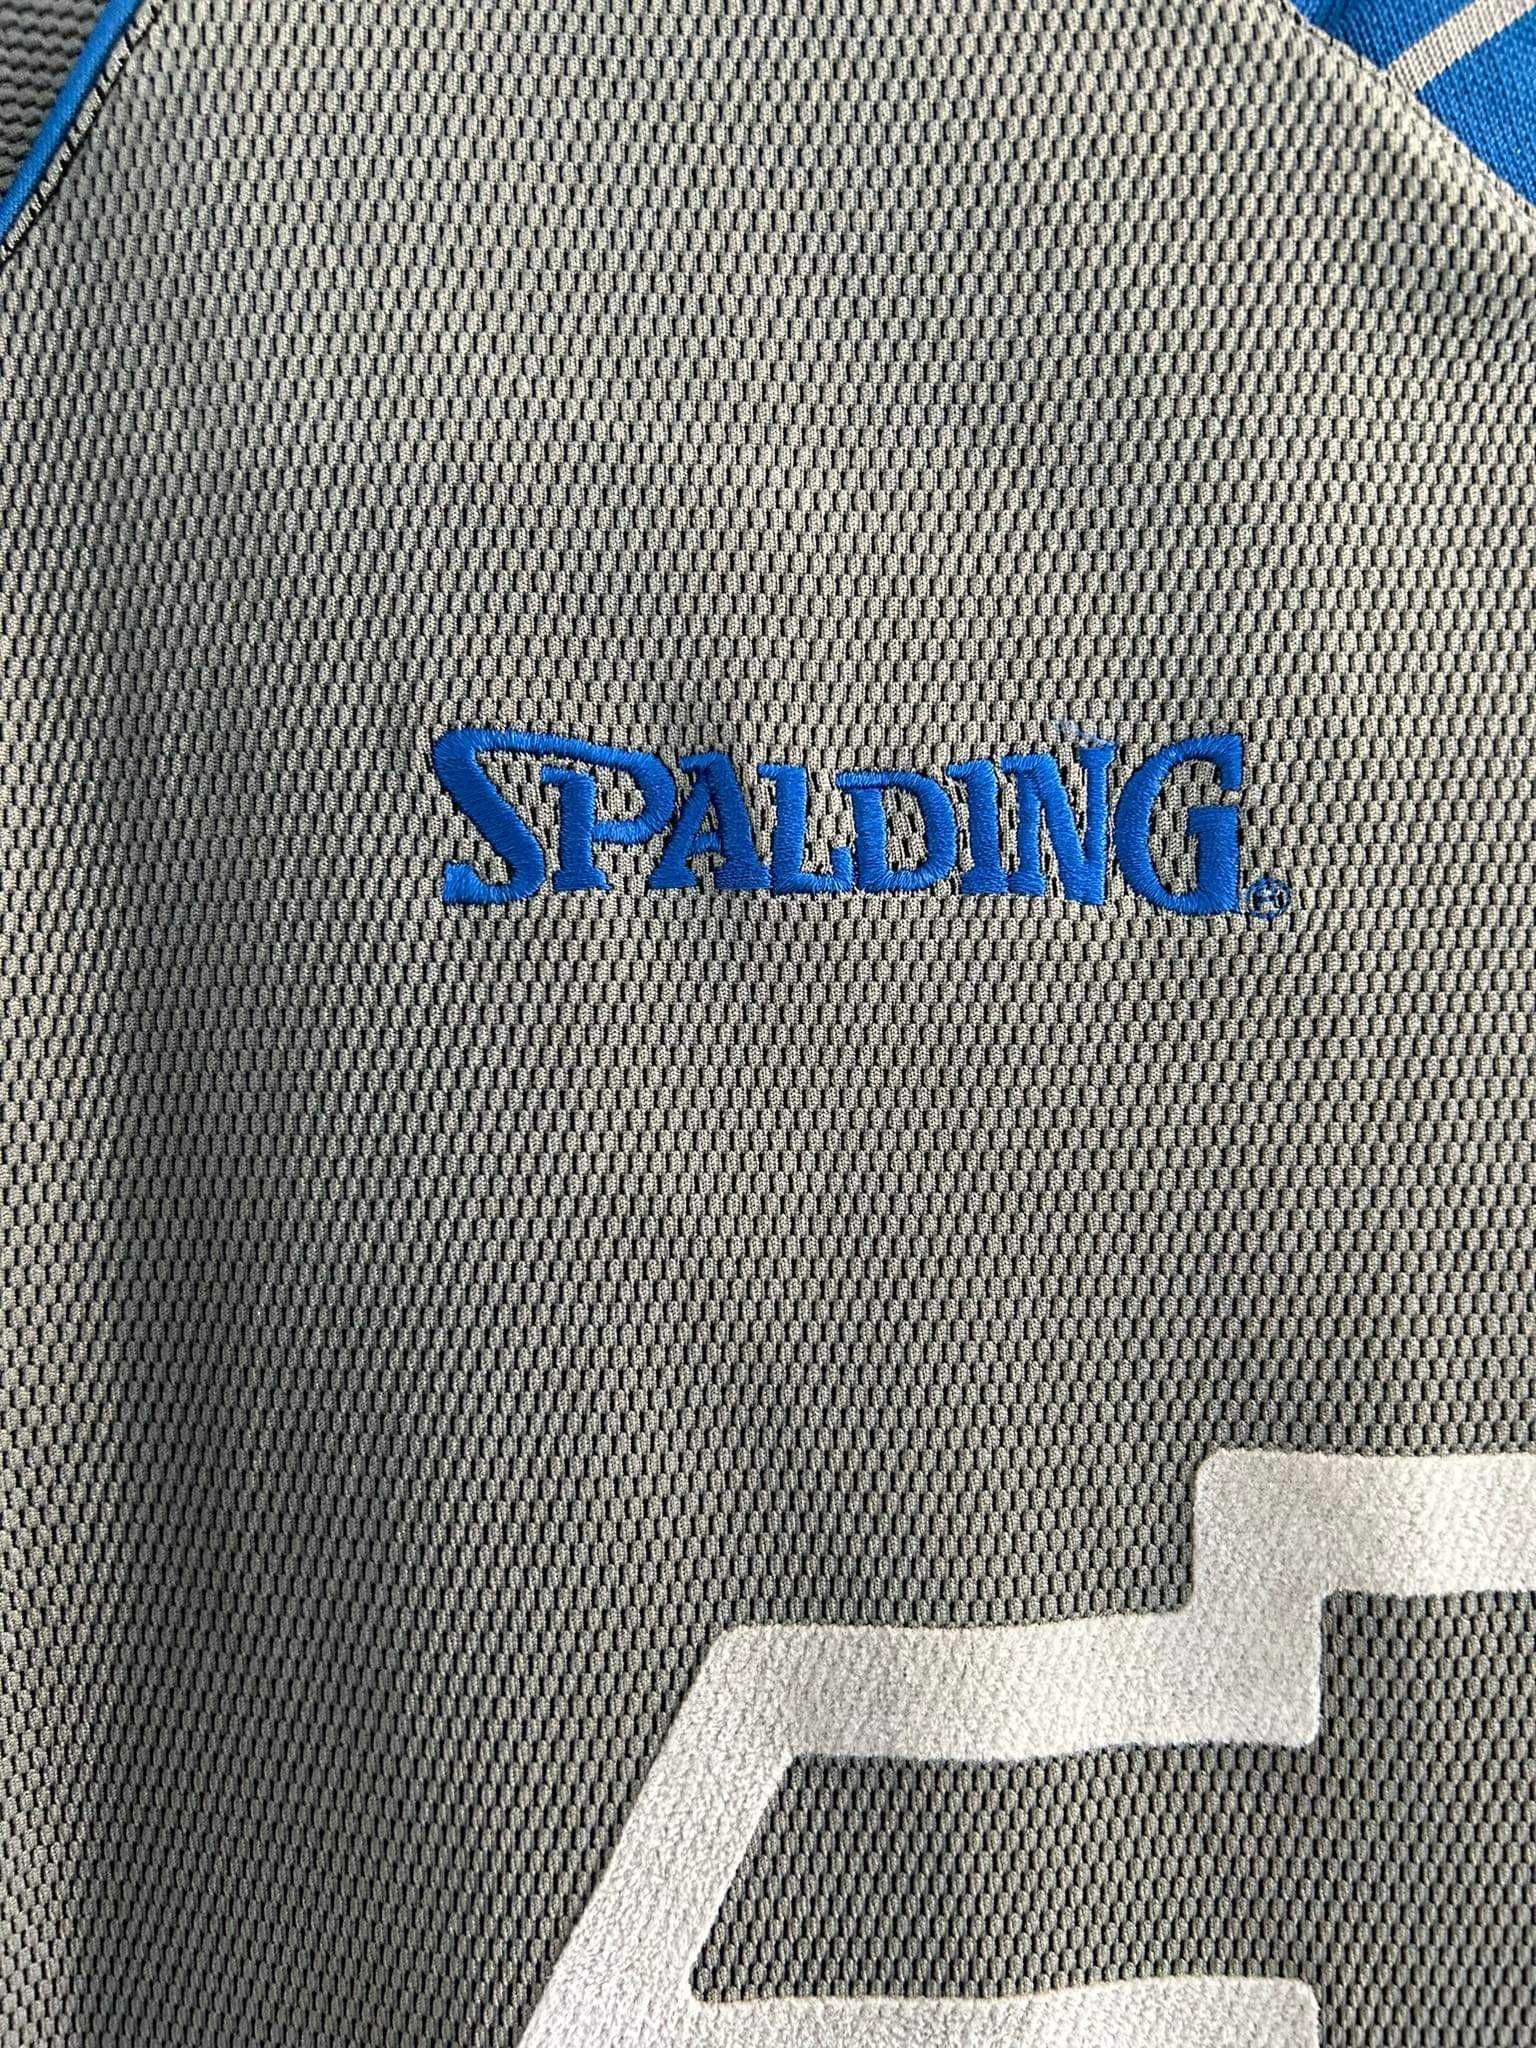 Koszulka koszykarska Spalding szara, rozmiar S